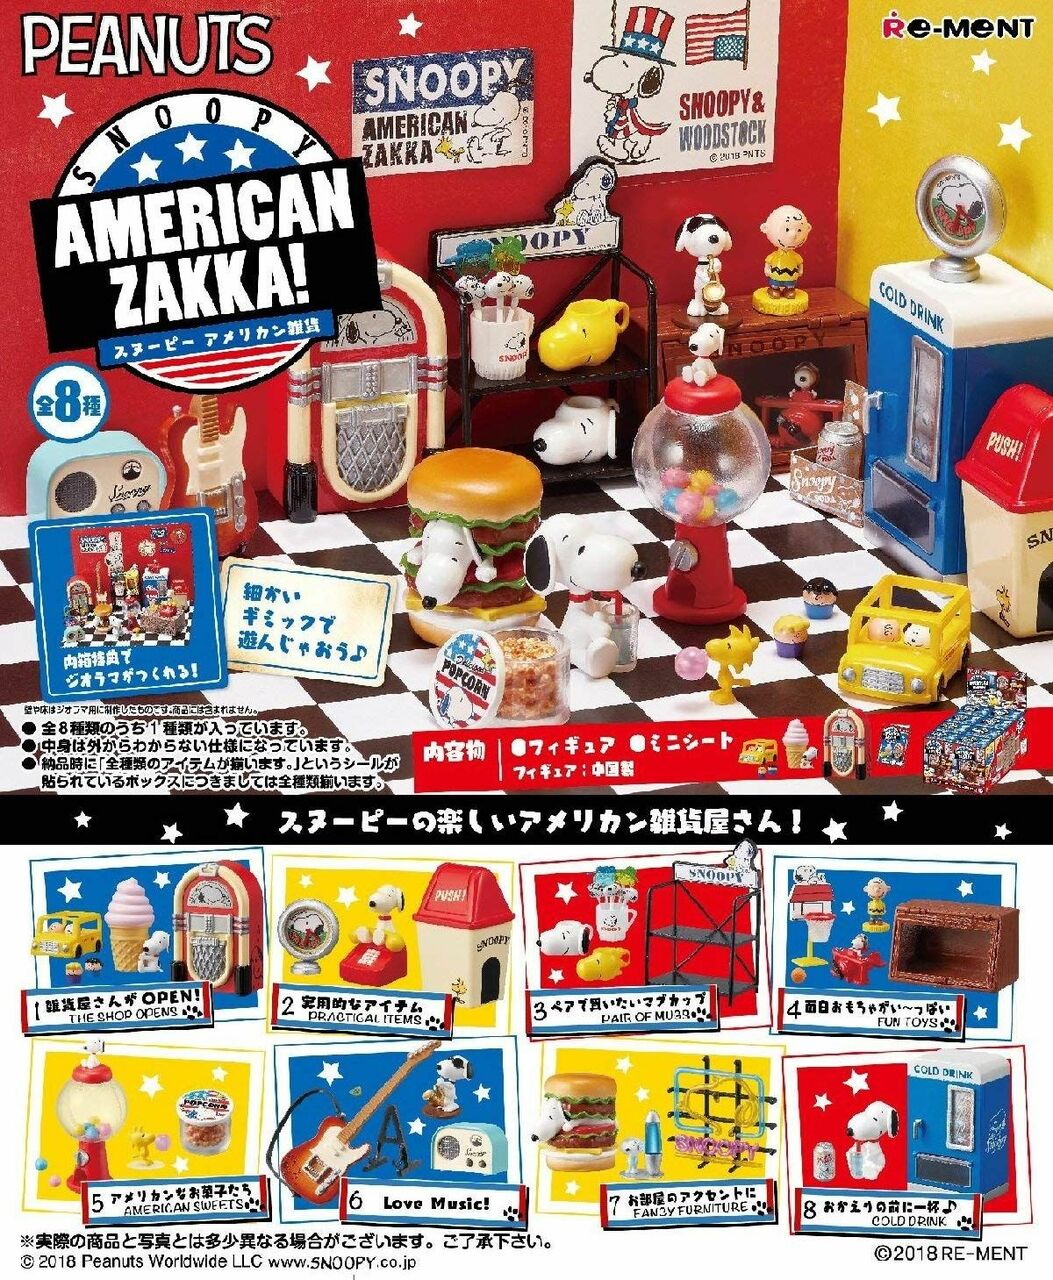 Peanuts Snoopy American Zakka! Blind Box Super Anime Store 